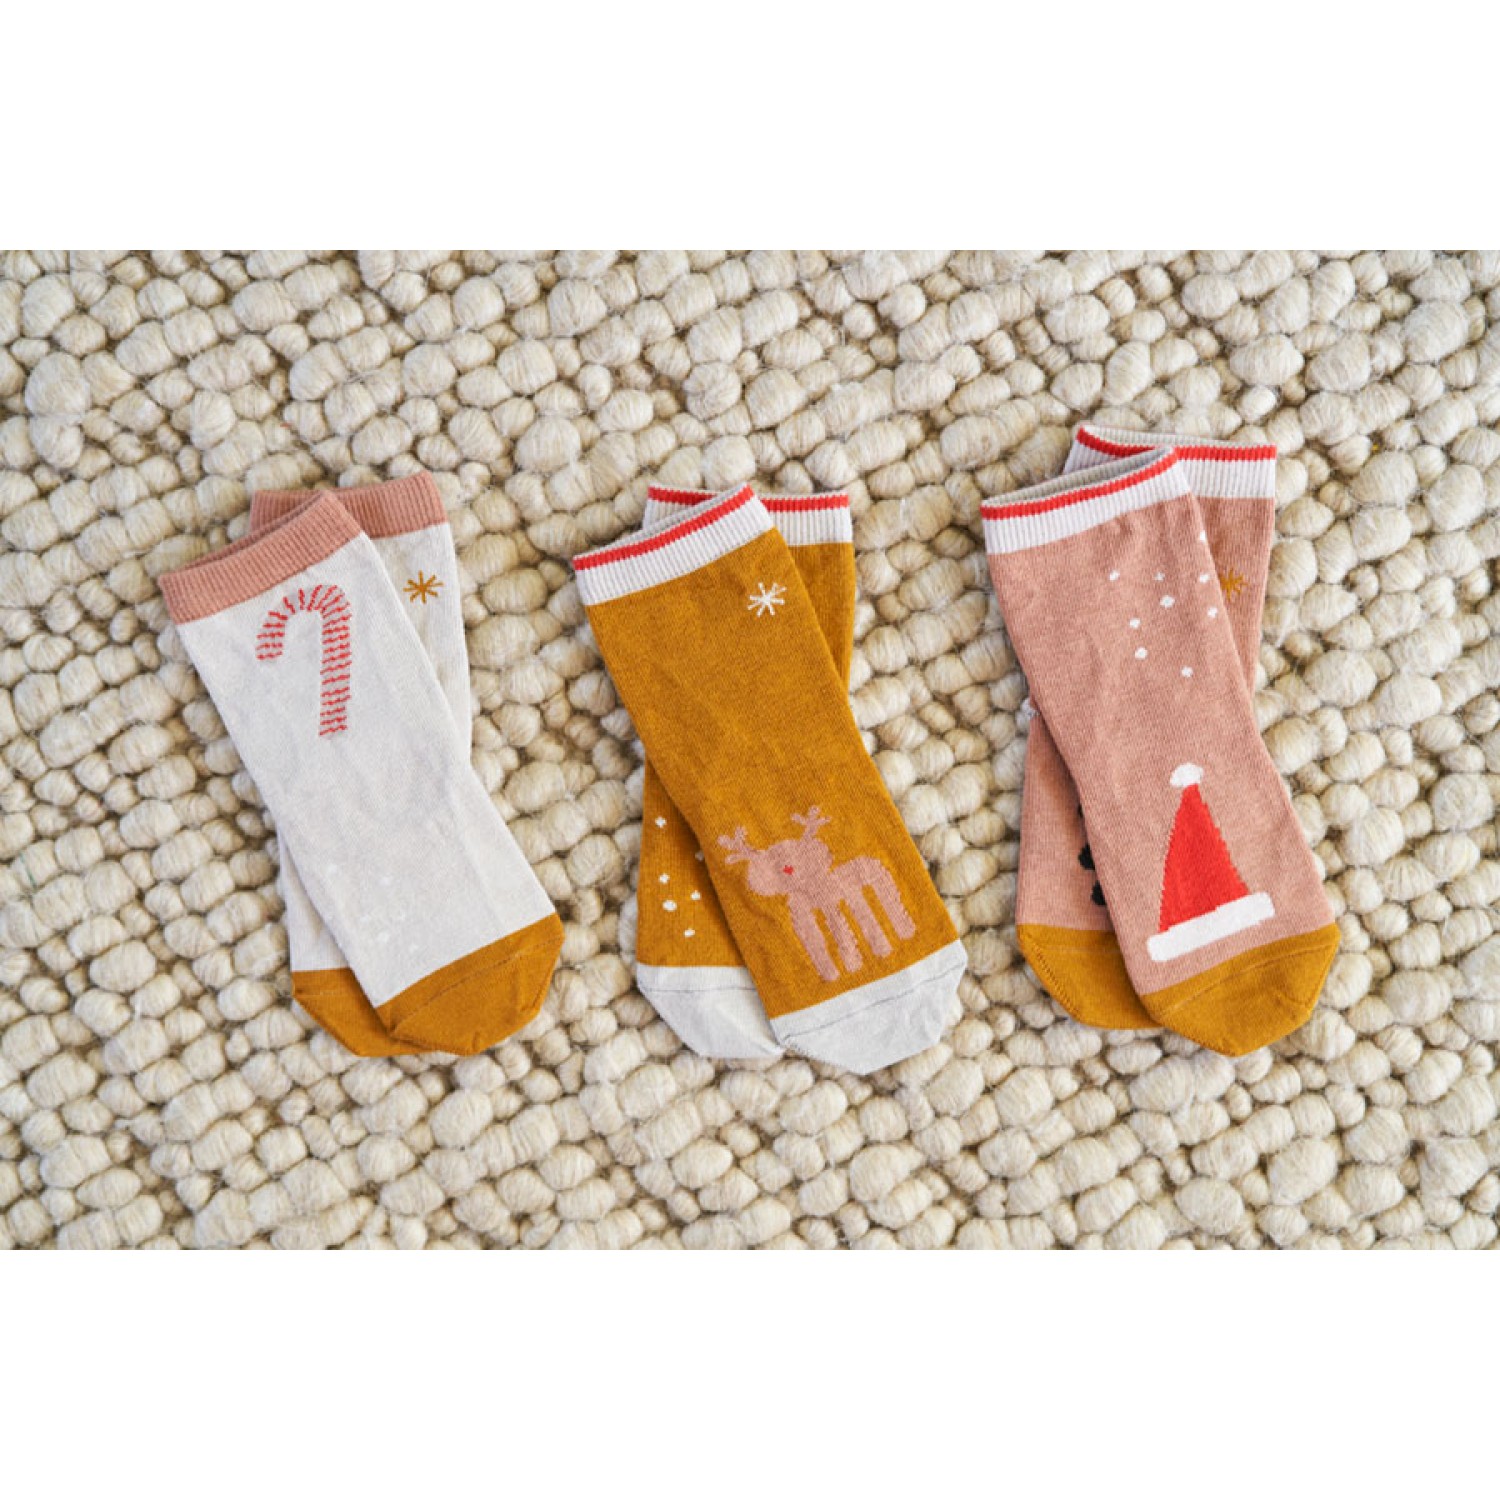 Silas Cotton Socks 3 Pack - Holiday tuscany rose multi mix